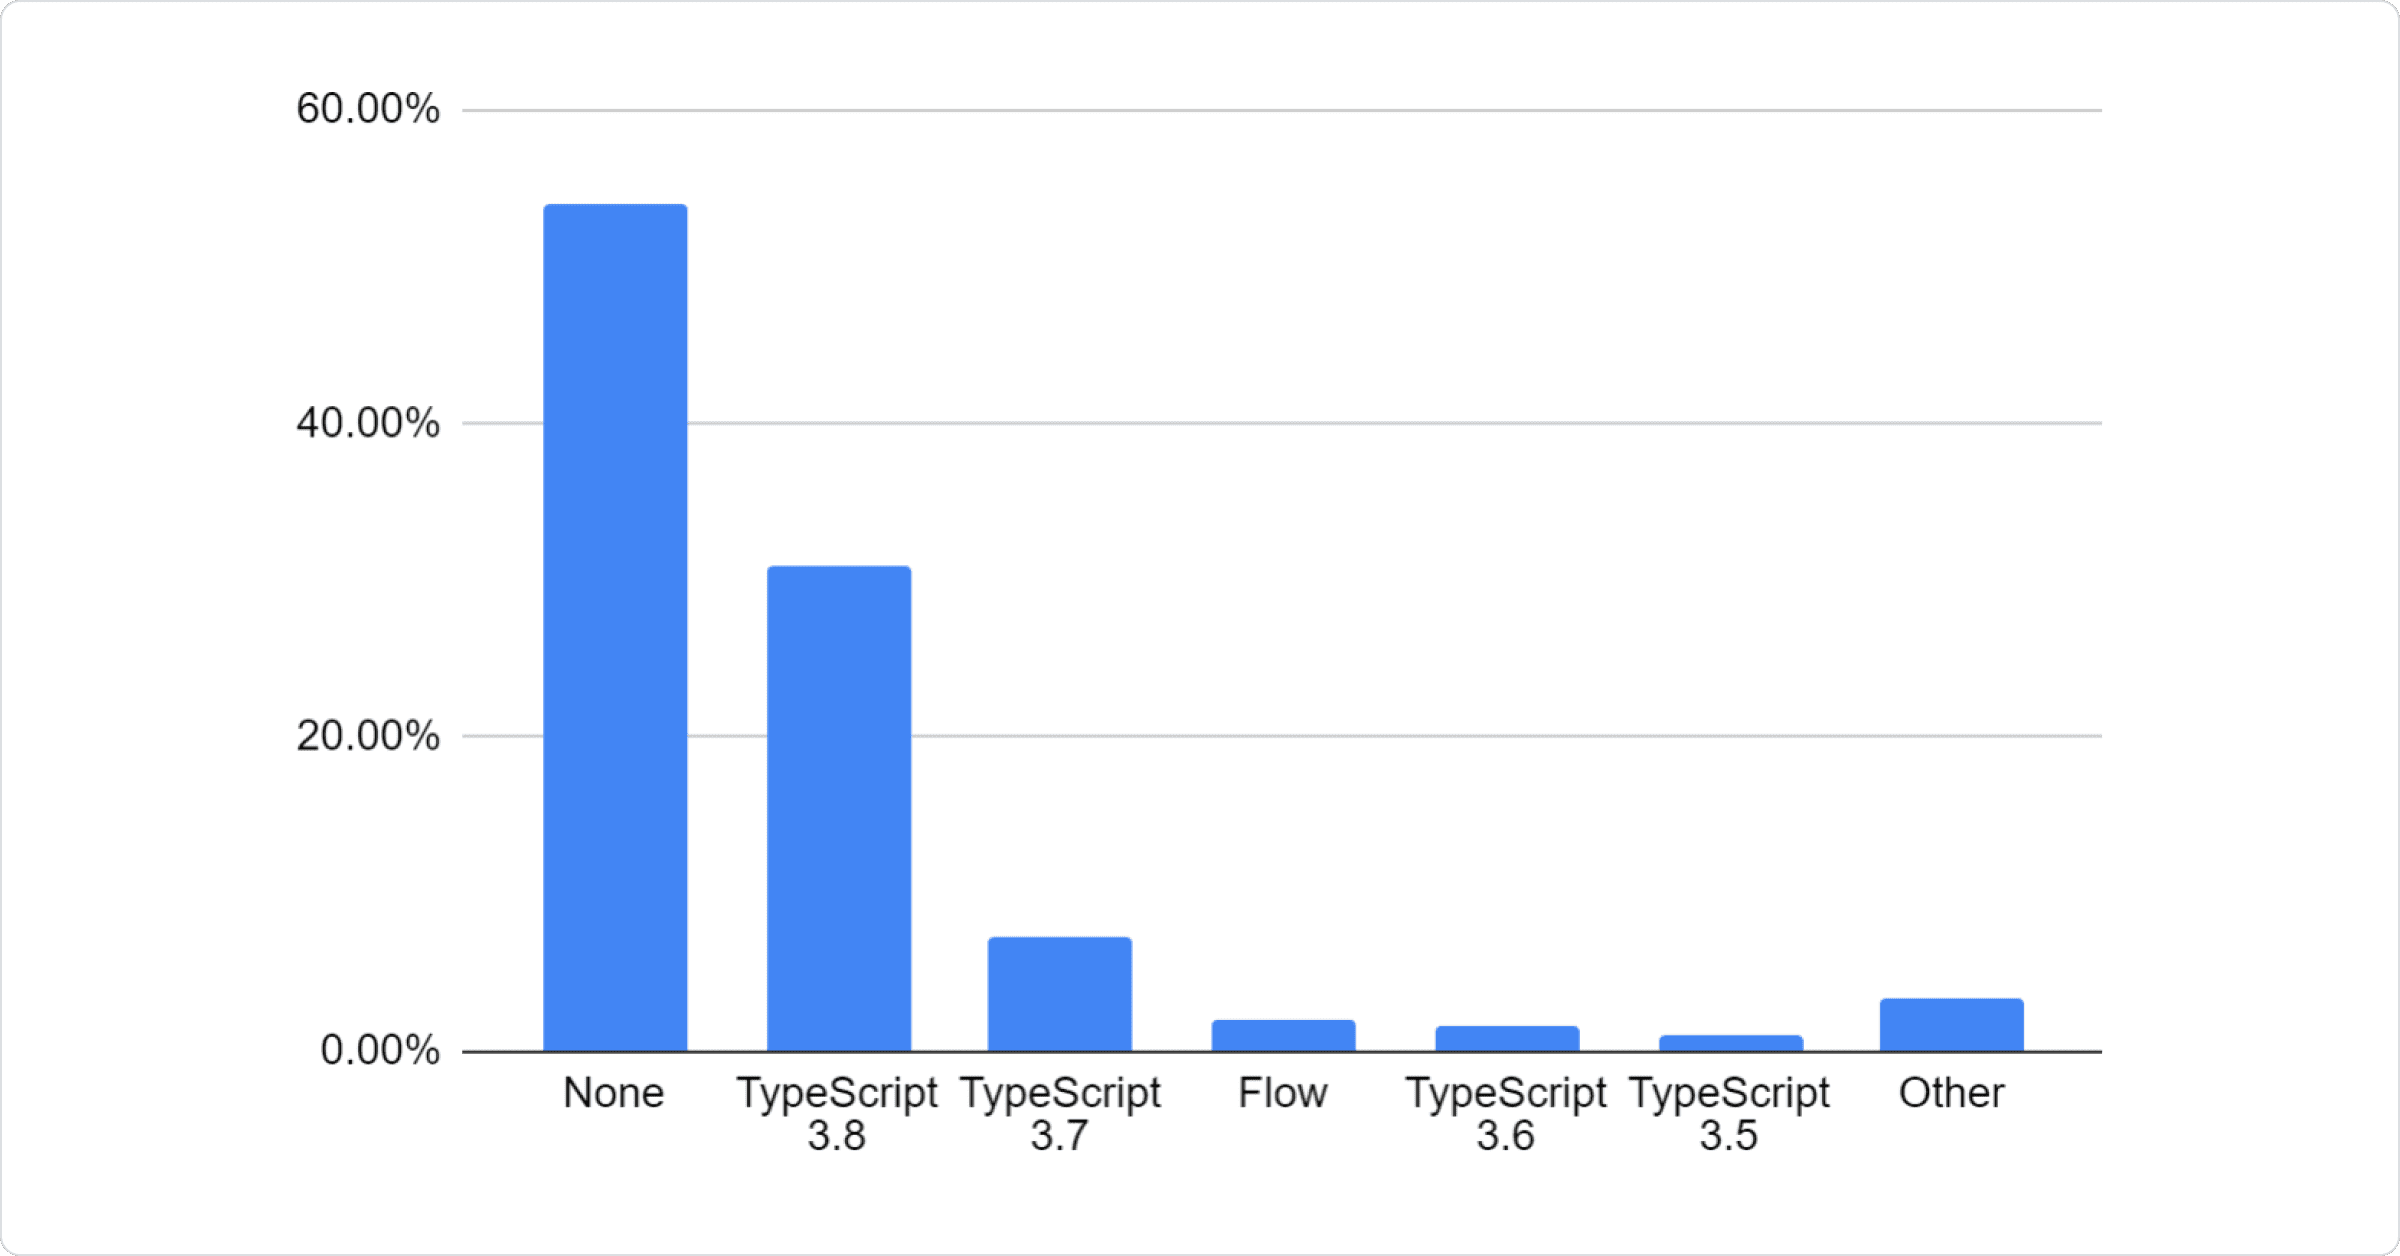 Bar chart: 54.08% None\n30.87% TypeScript 3.8, 7.31% TypeScript 3.7, 1.90% Flow, 1.55% TypeScript 3.6, 0.98% TypeScript 3.5, 3.31% Other